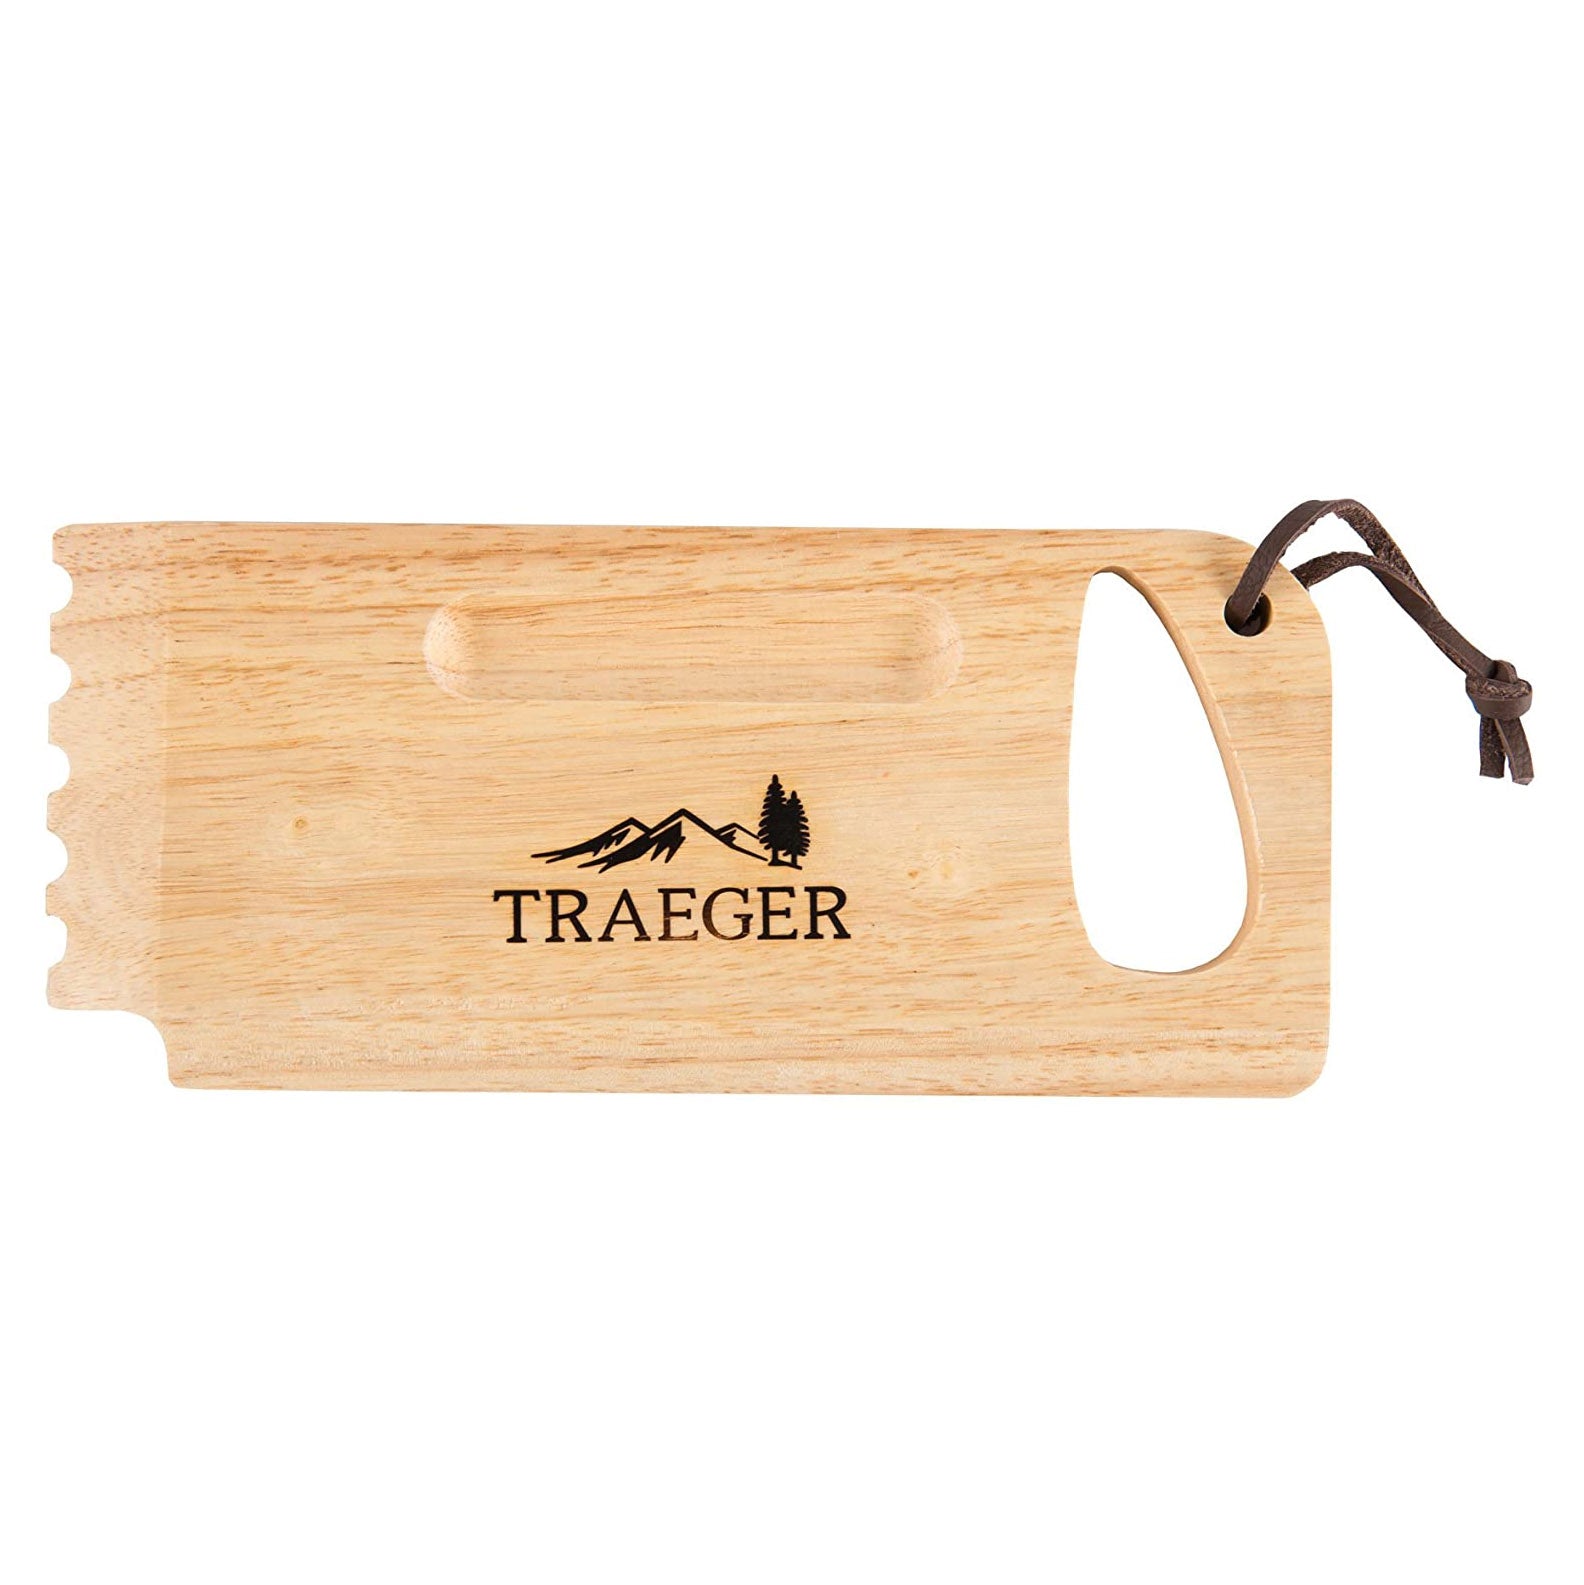 Traeger Wooden Grill Grate Scrape BAC454